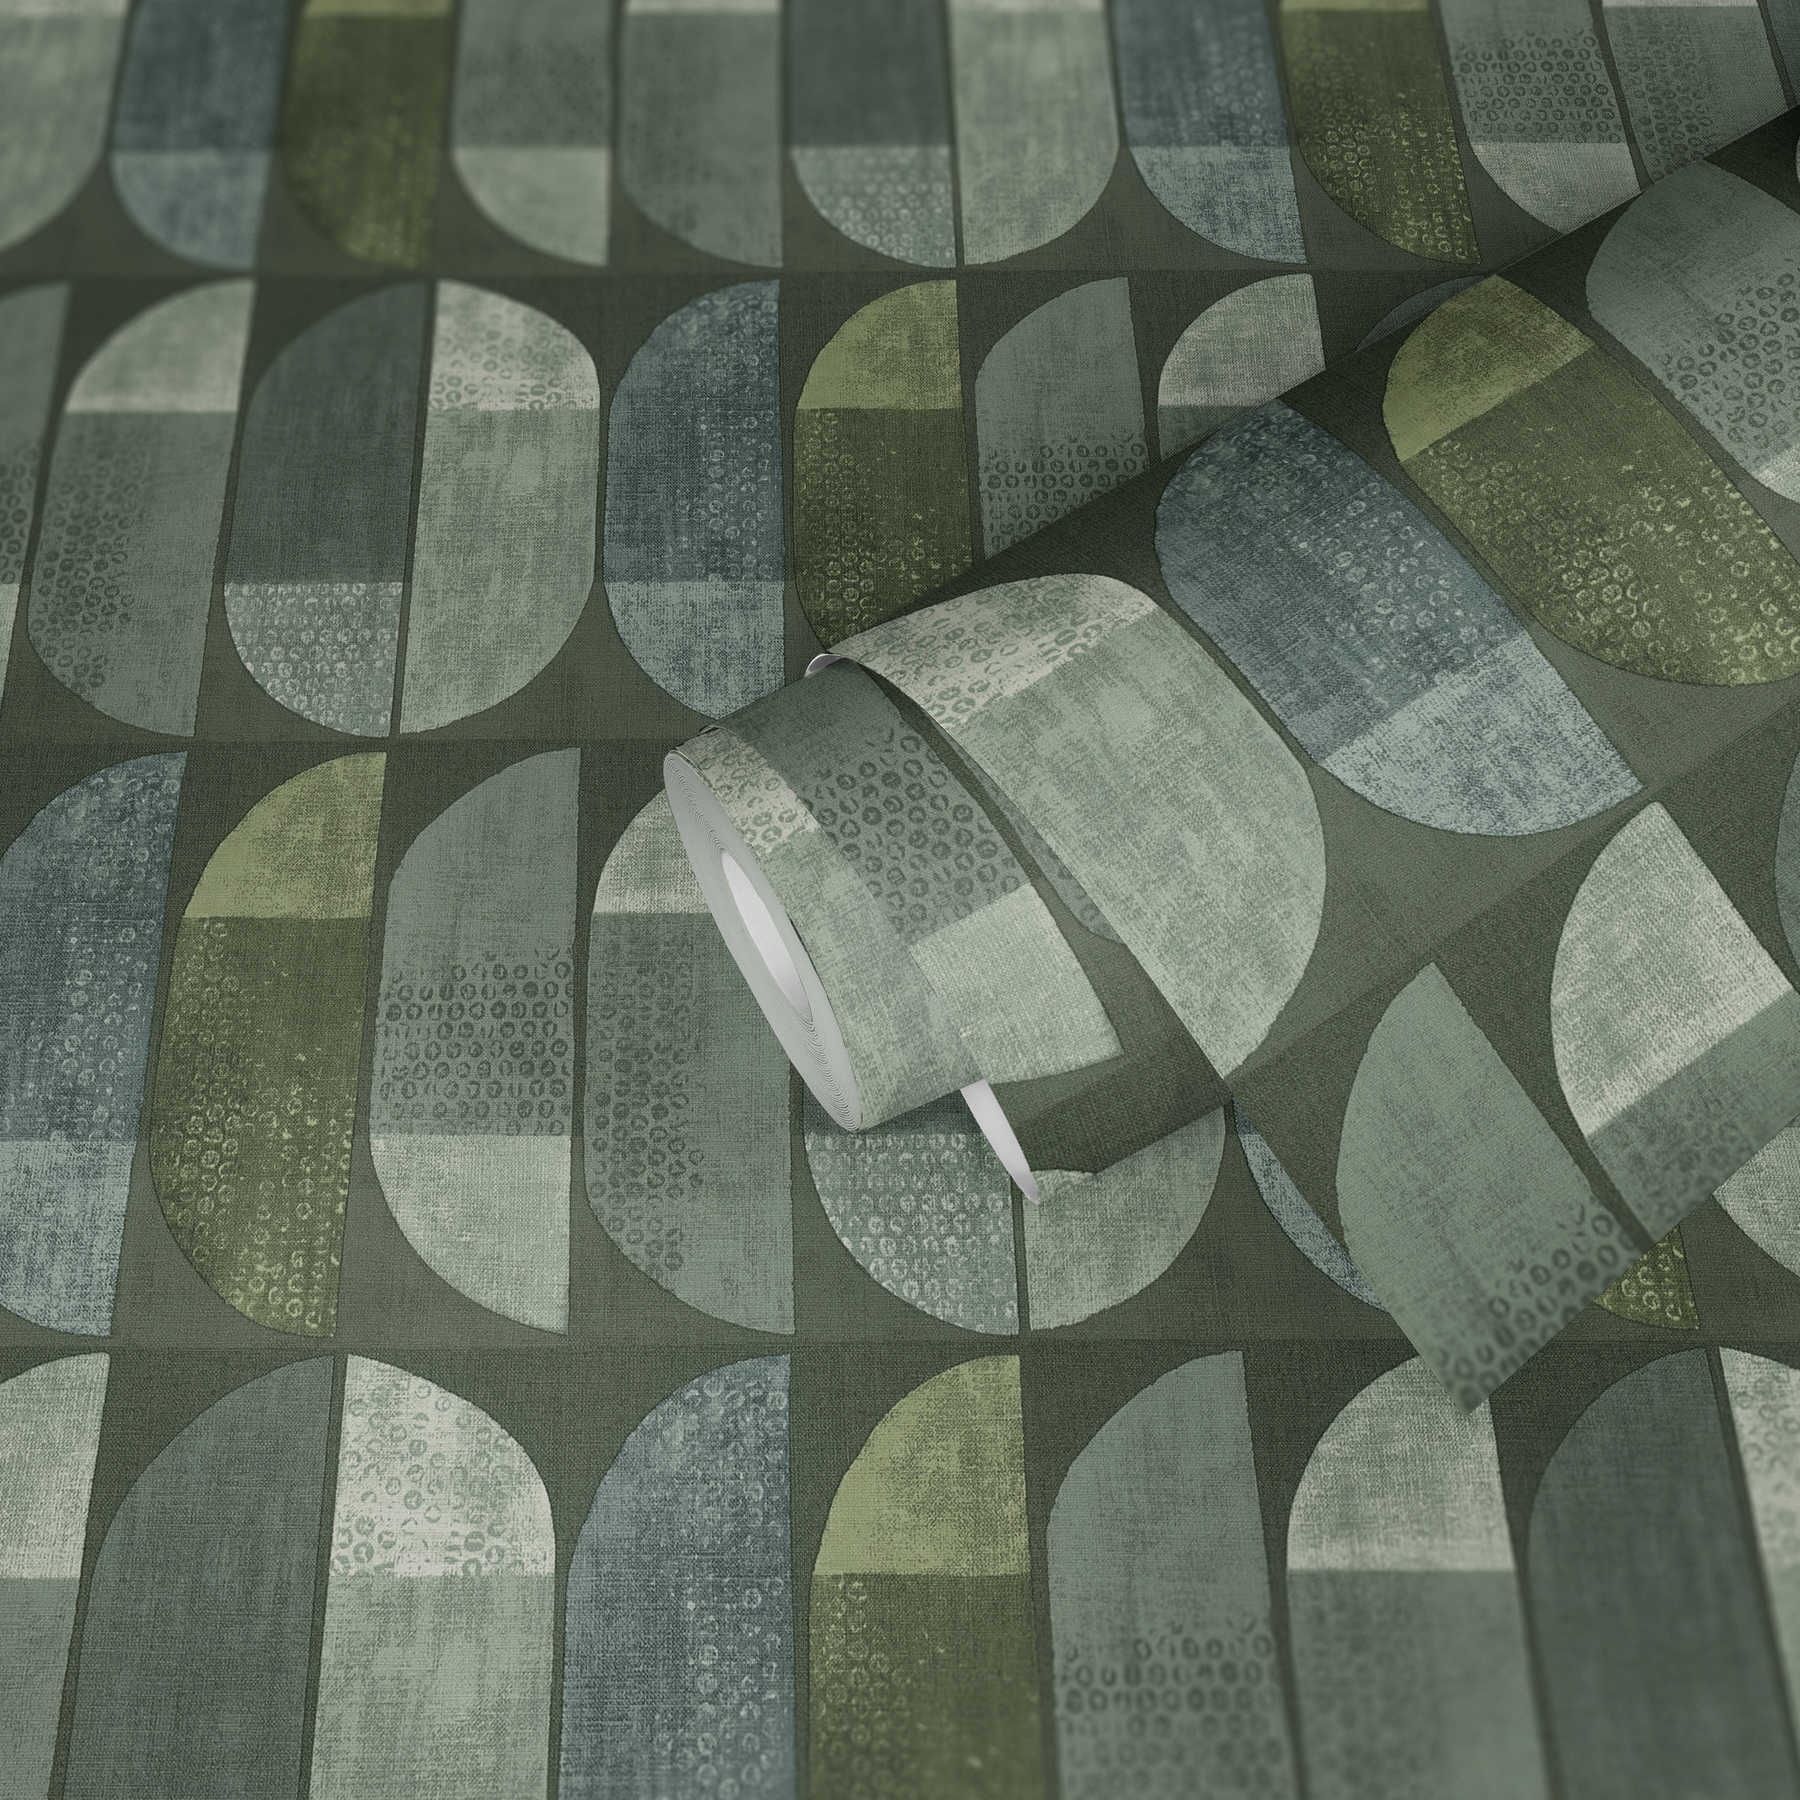             Wallpaper geometric retro pattern, Scandinavian style - green
        